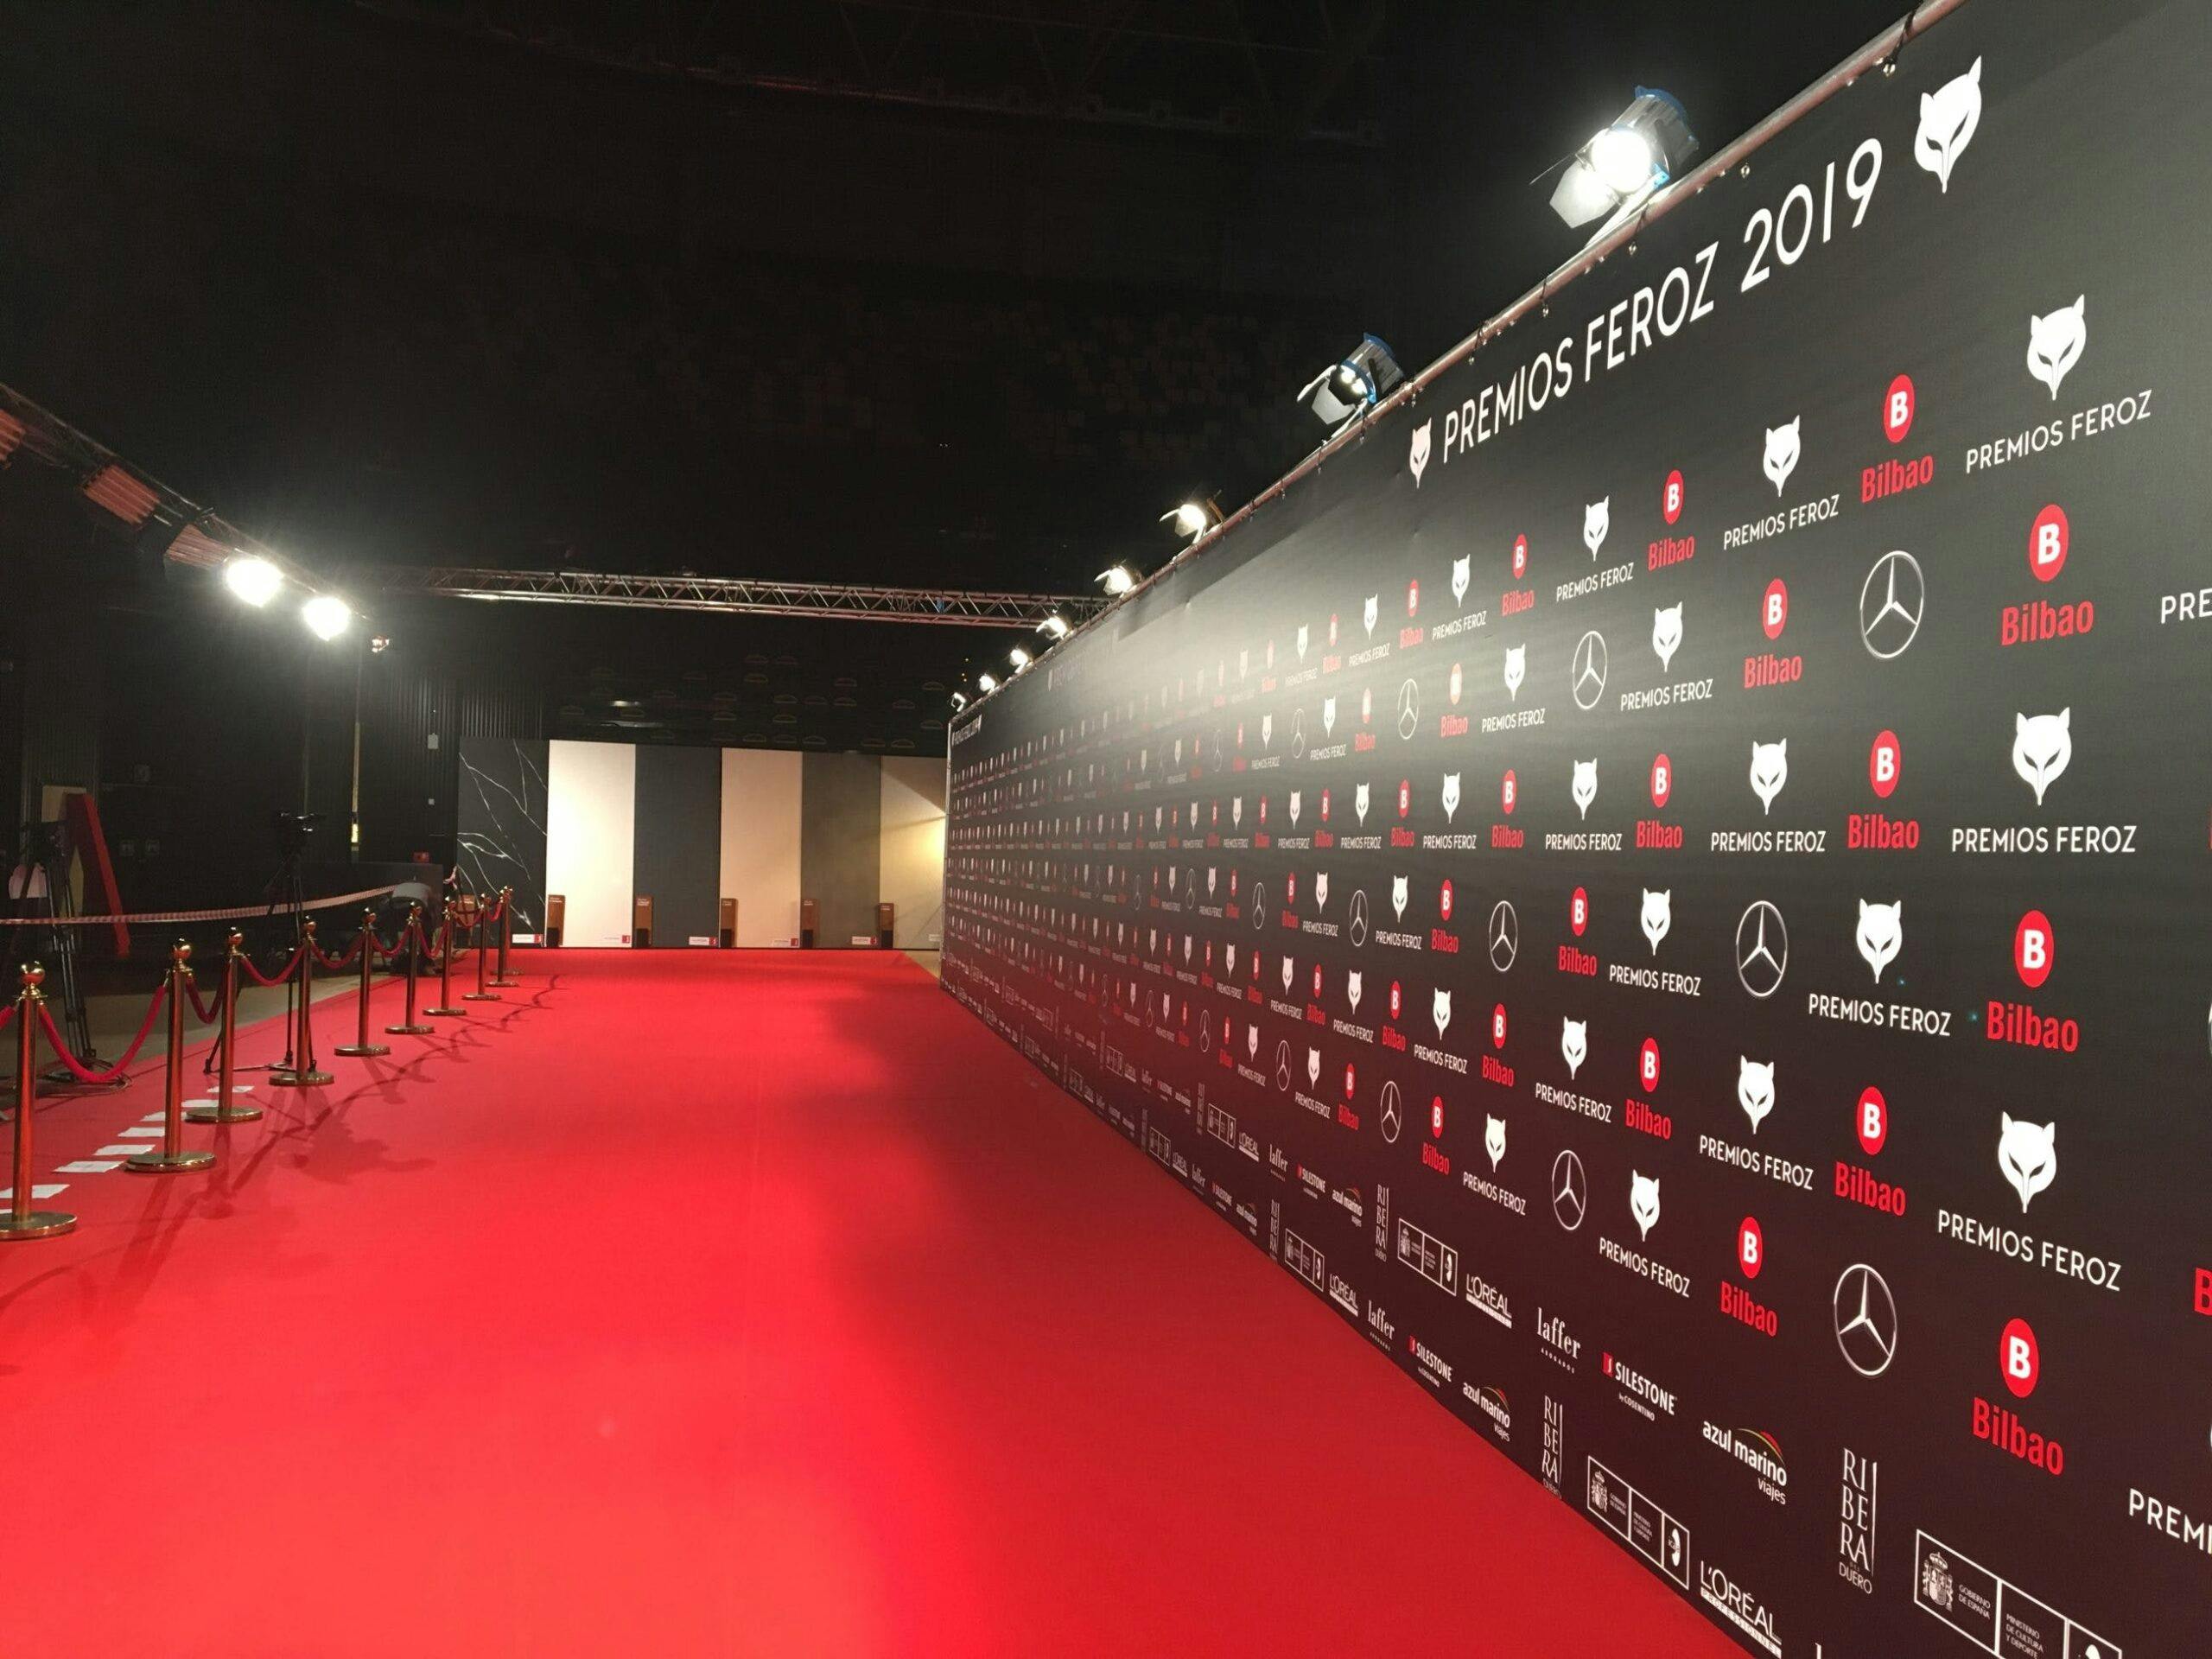 Image 33 of Alfombra roja Premios Feroz 2019 Tablas Silestone 1 scaled in Silestone® and 2019 Feroz Awards - Cosentino